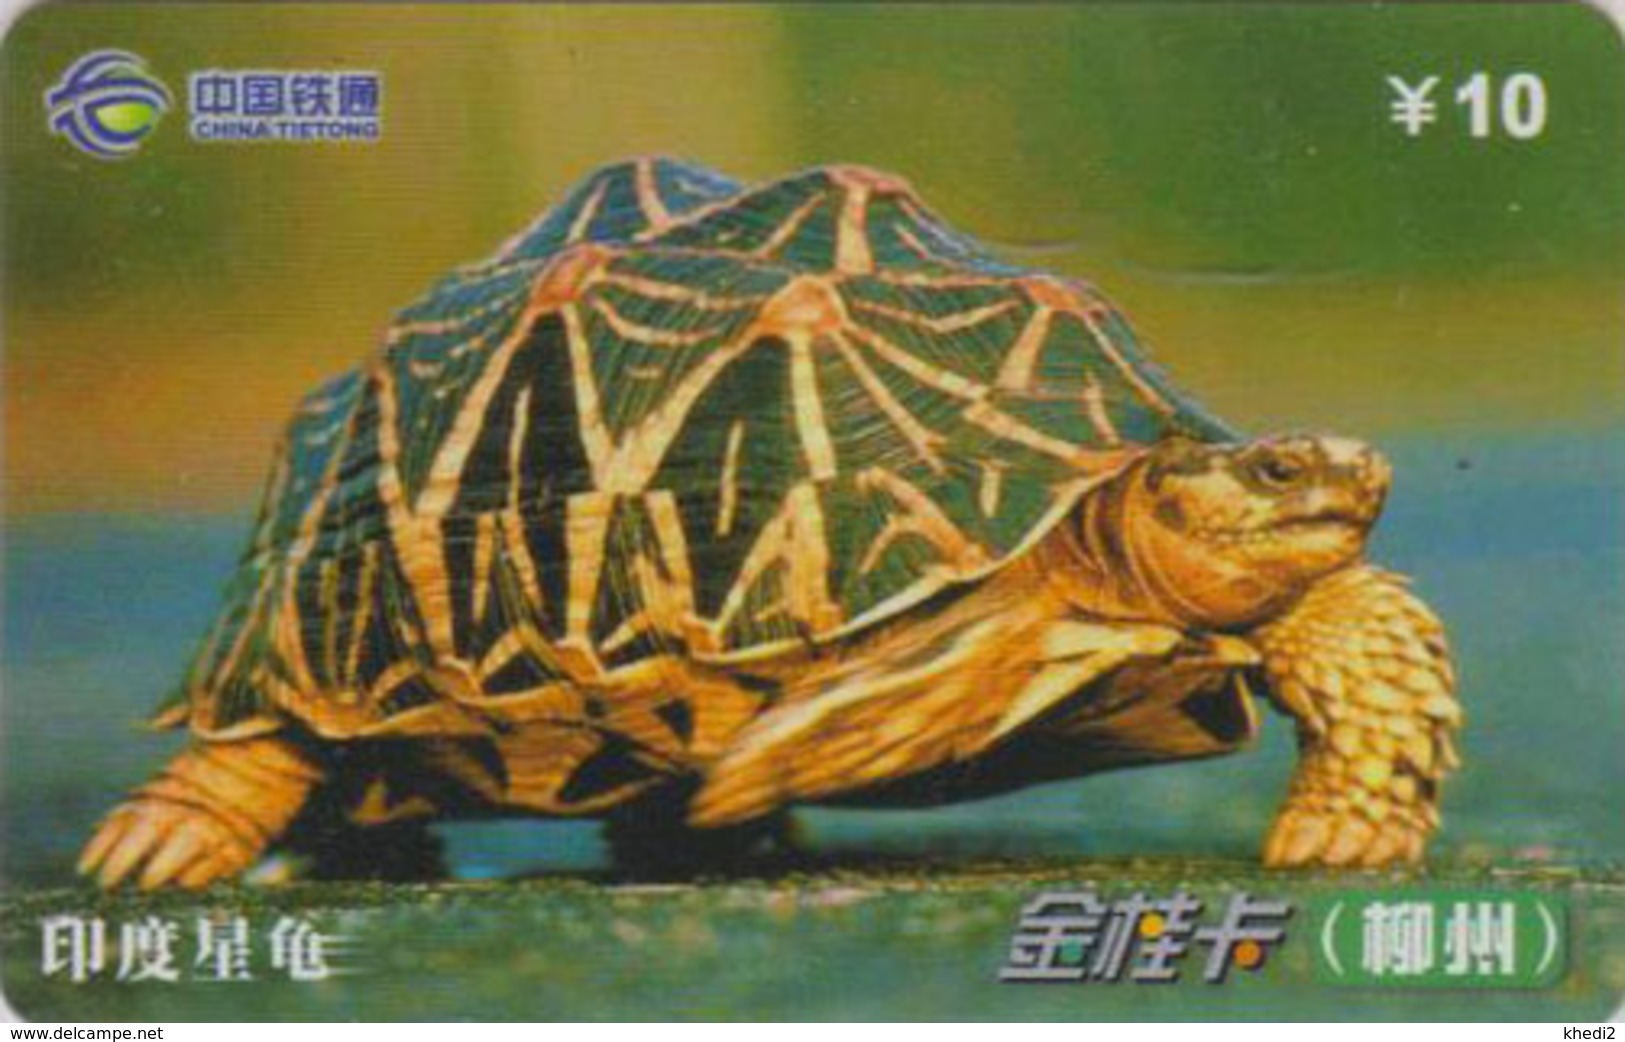 Télécarte Chine Tietong - Animal - TORTUE - TURTLE Phonecard - SCHILDKRÖTE Telefonkarte - 111 - Turtles